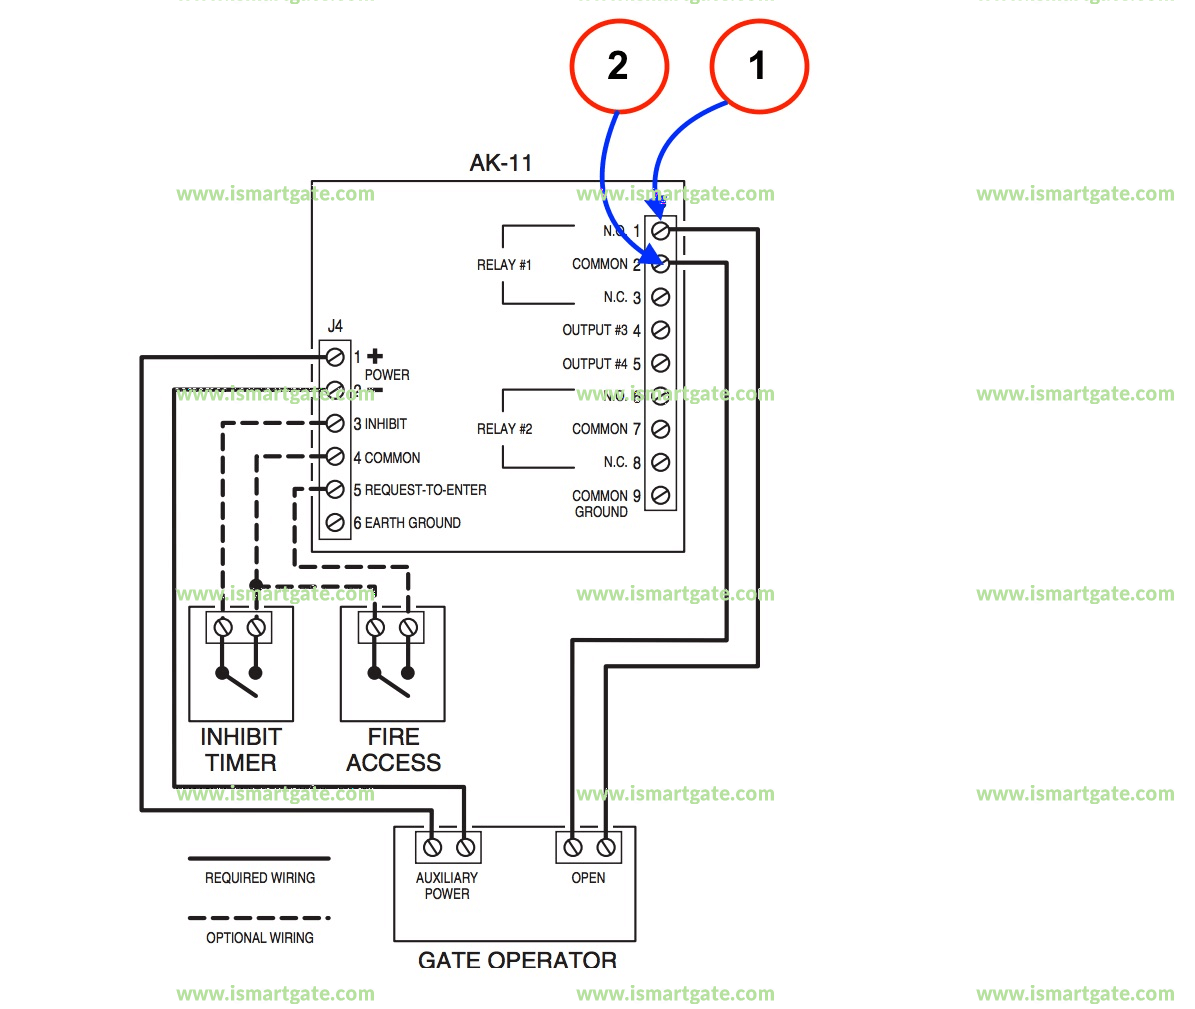 Wiring diagram for Linear AK-11